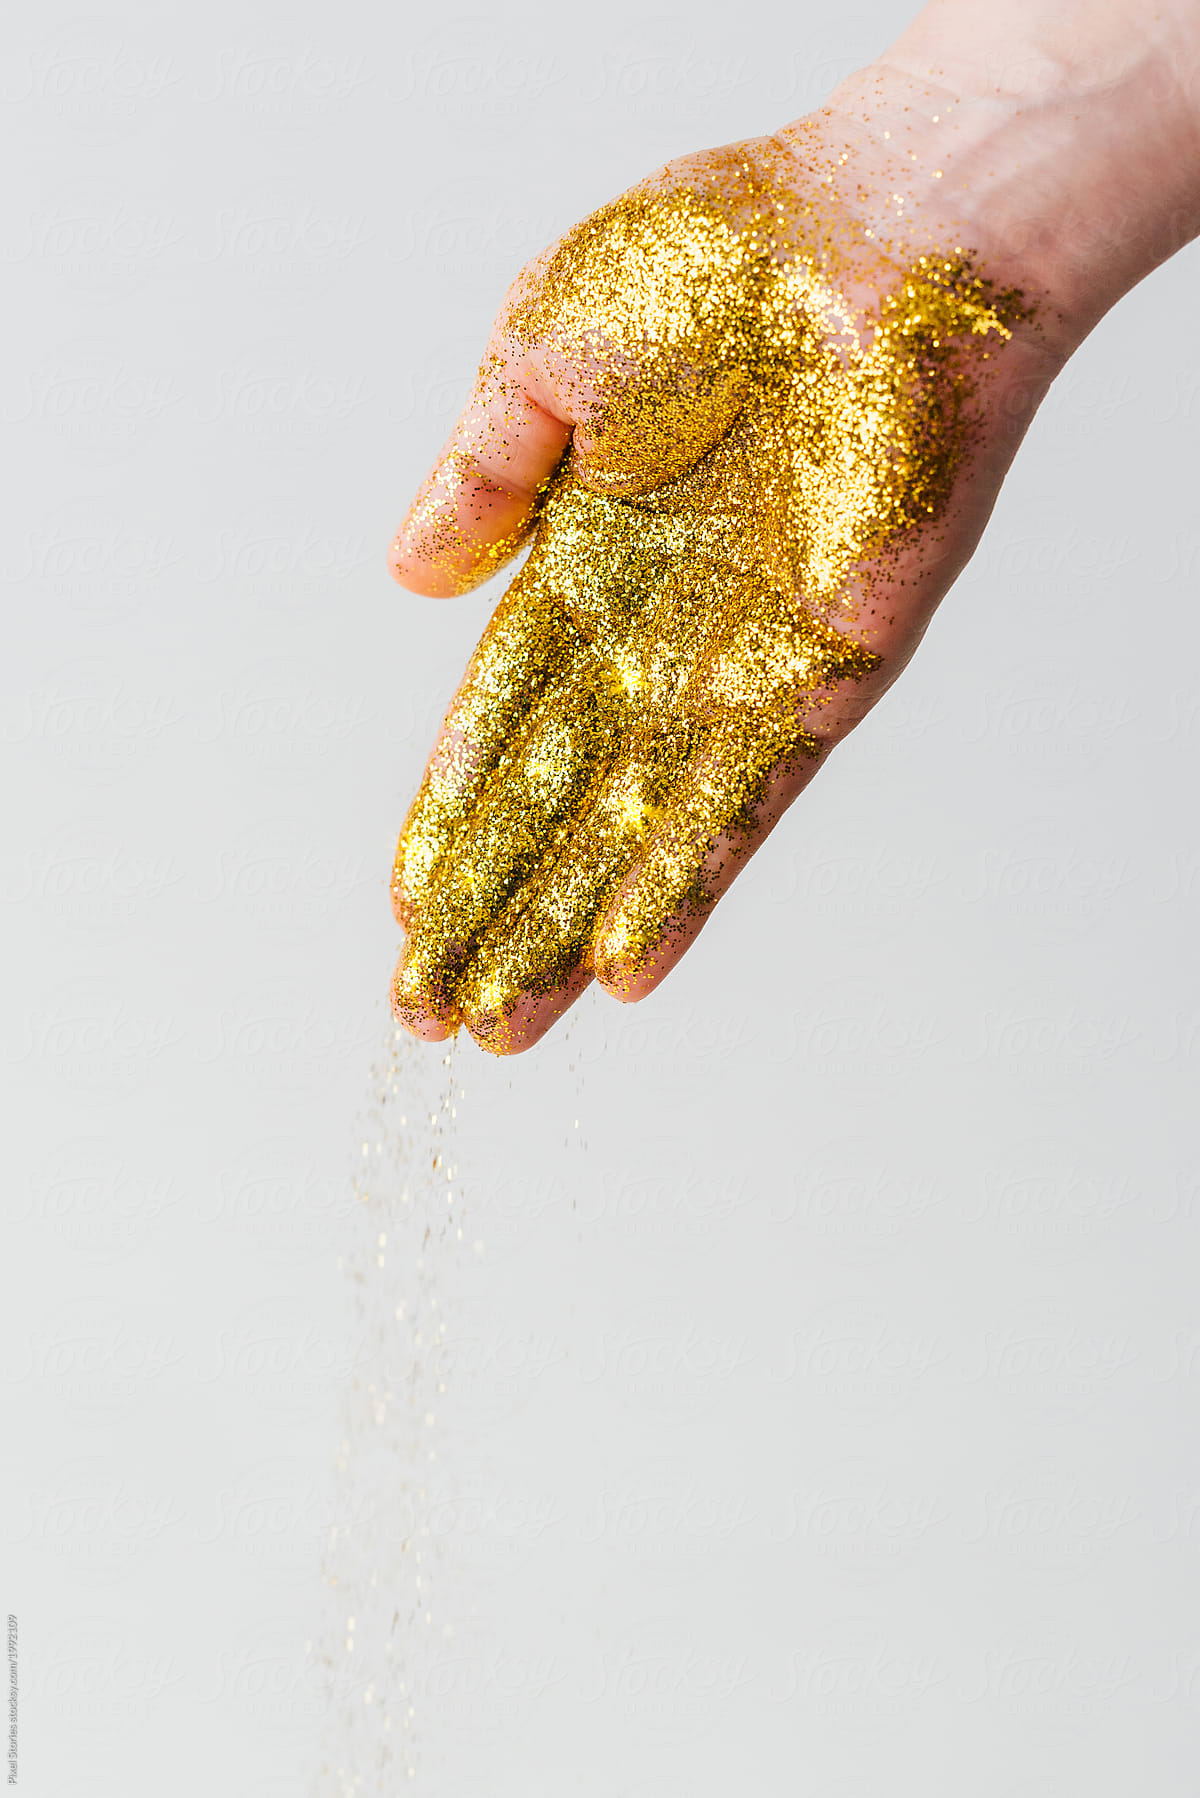 Glitter falling from hand covered in golden glitter